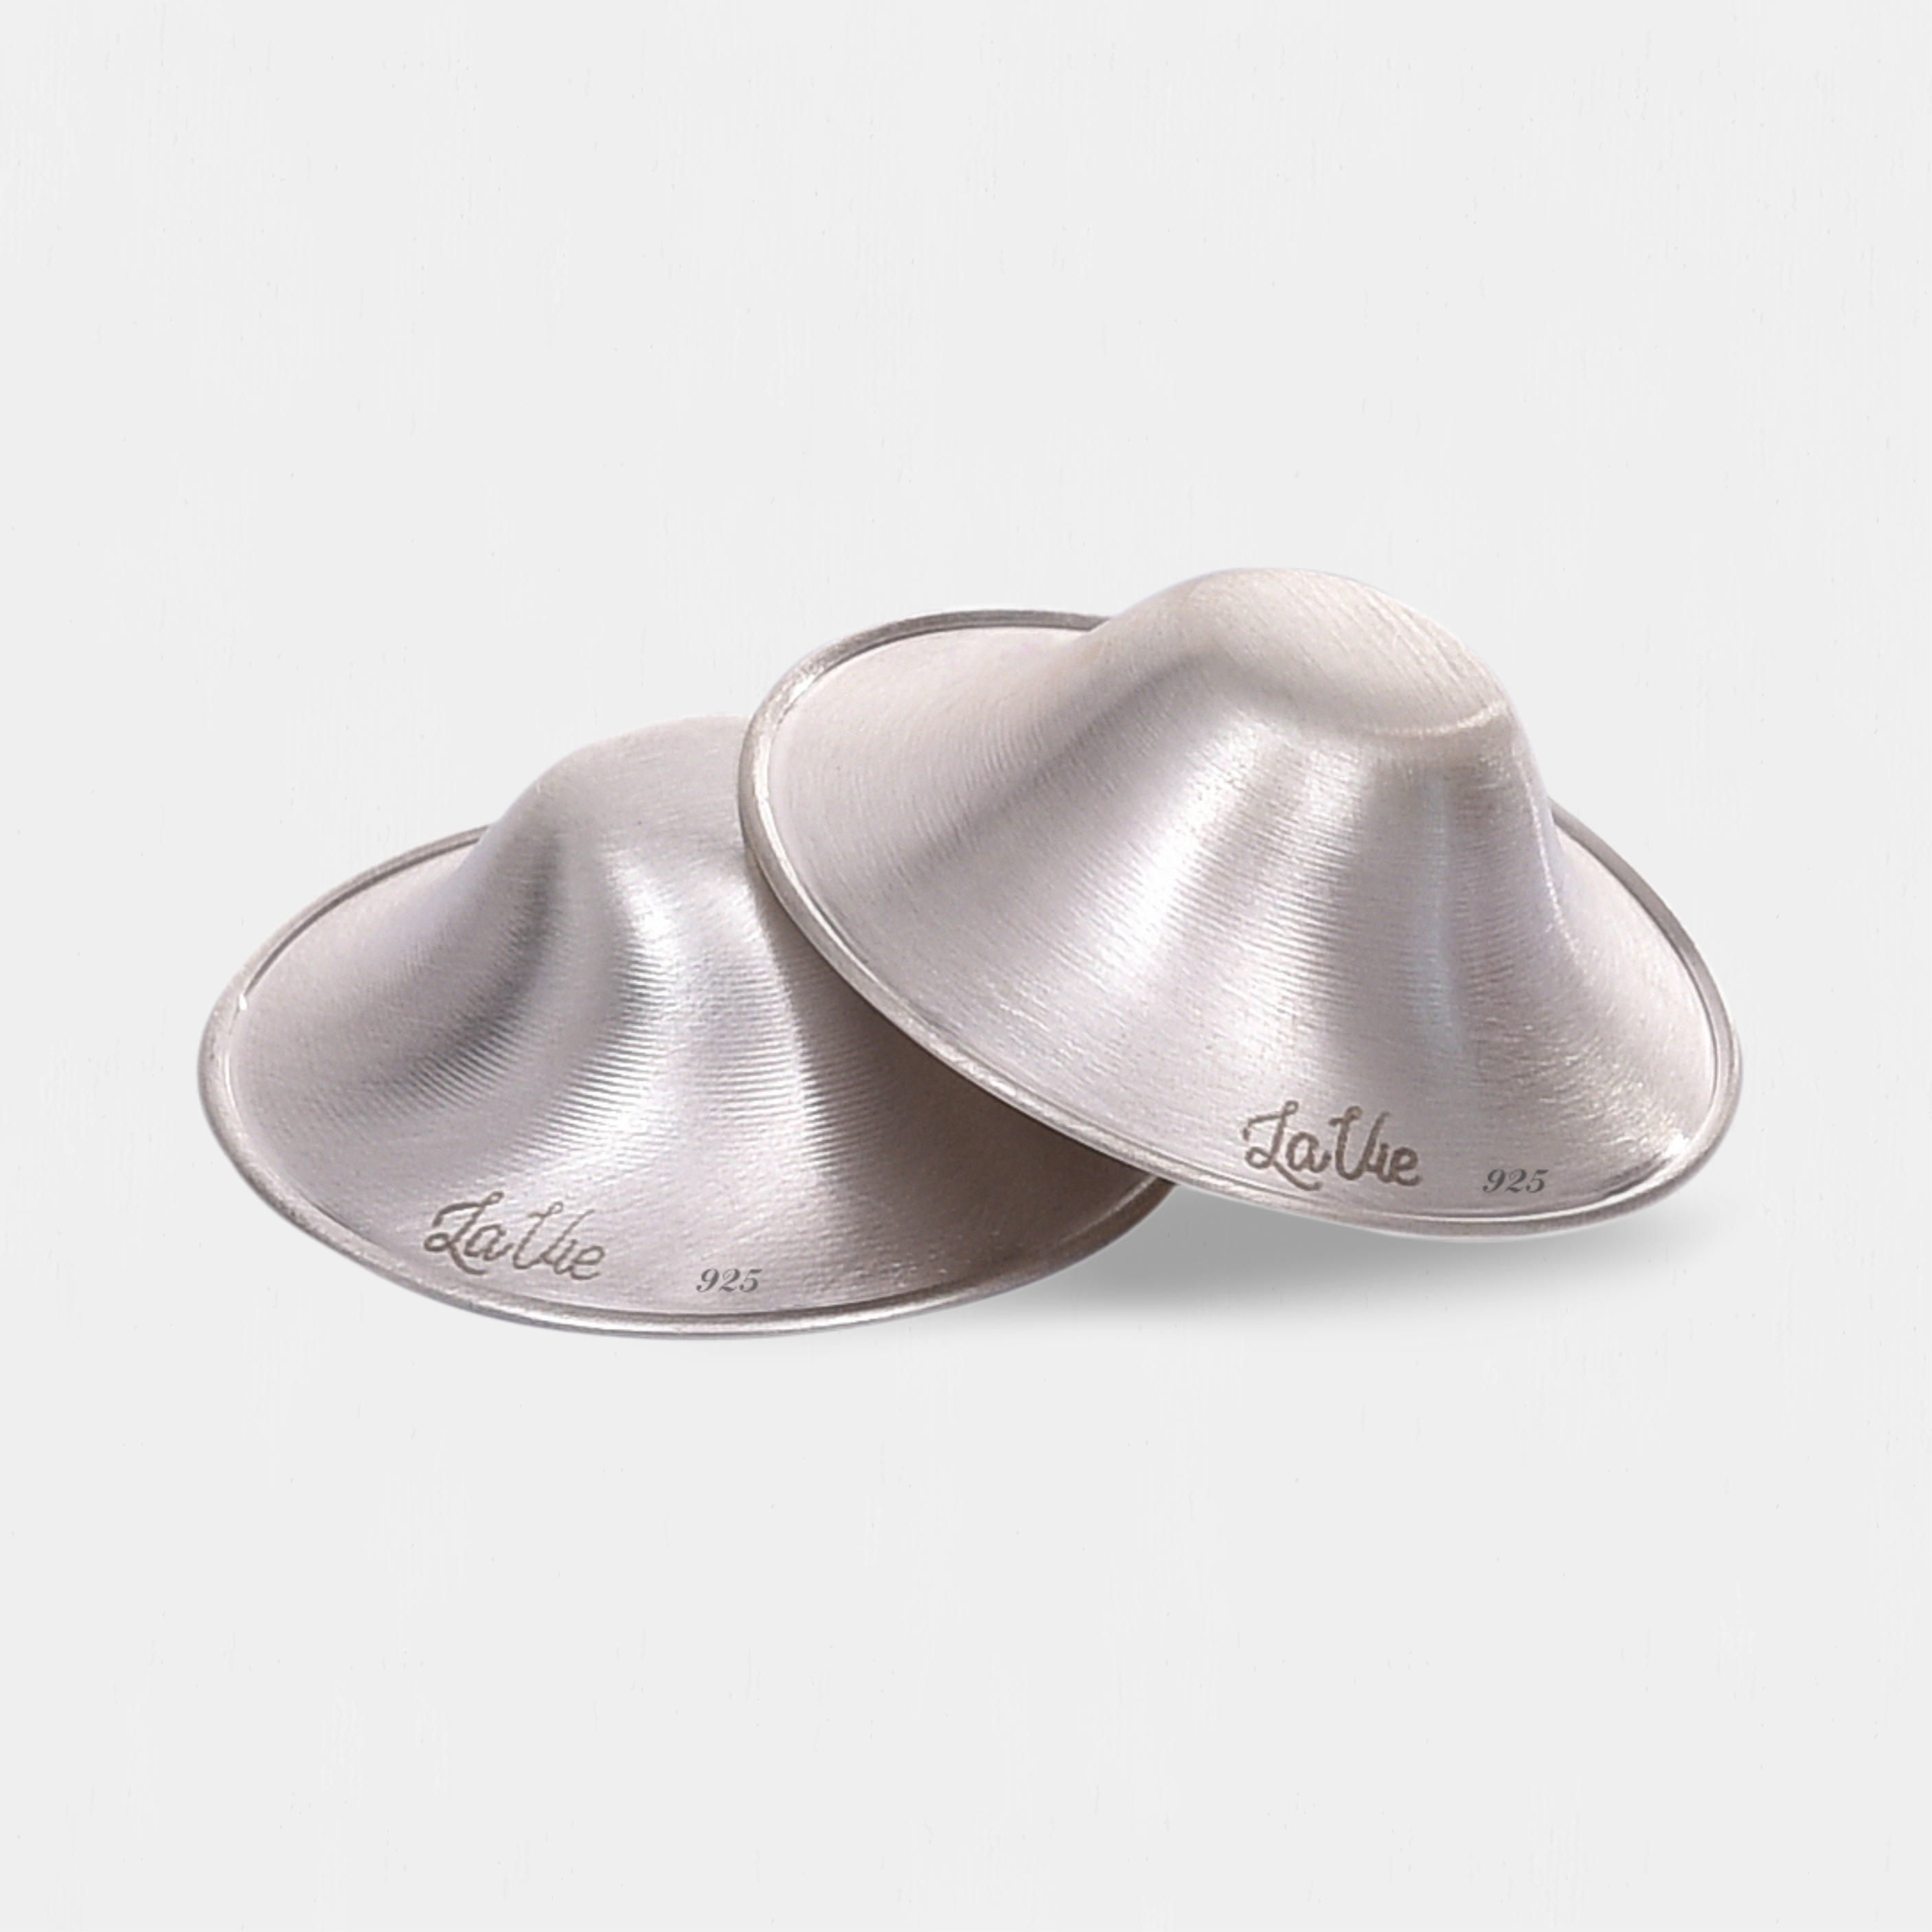 Silver Nursing Cups, Lovenoobs Nipple Covers for Breastfeeding